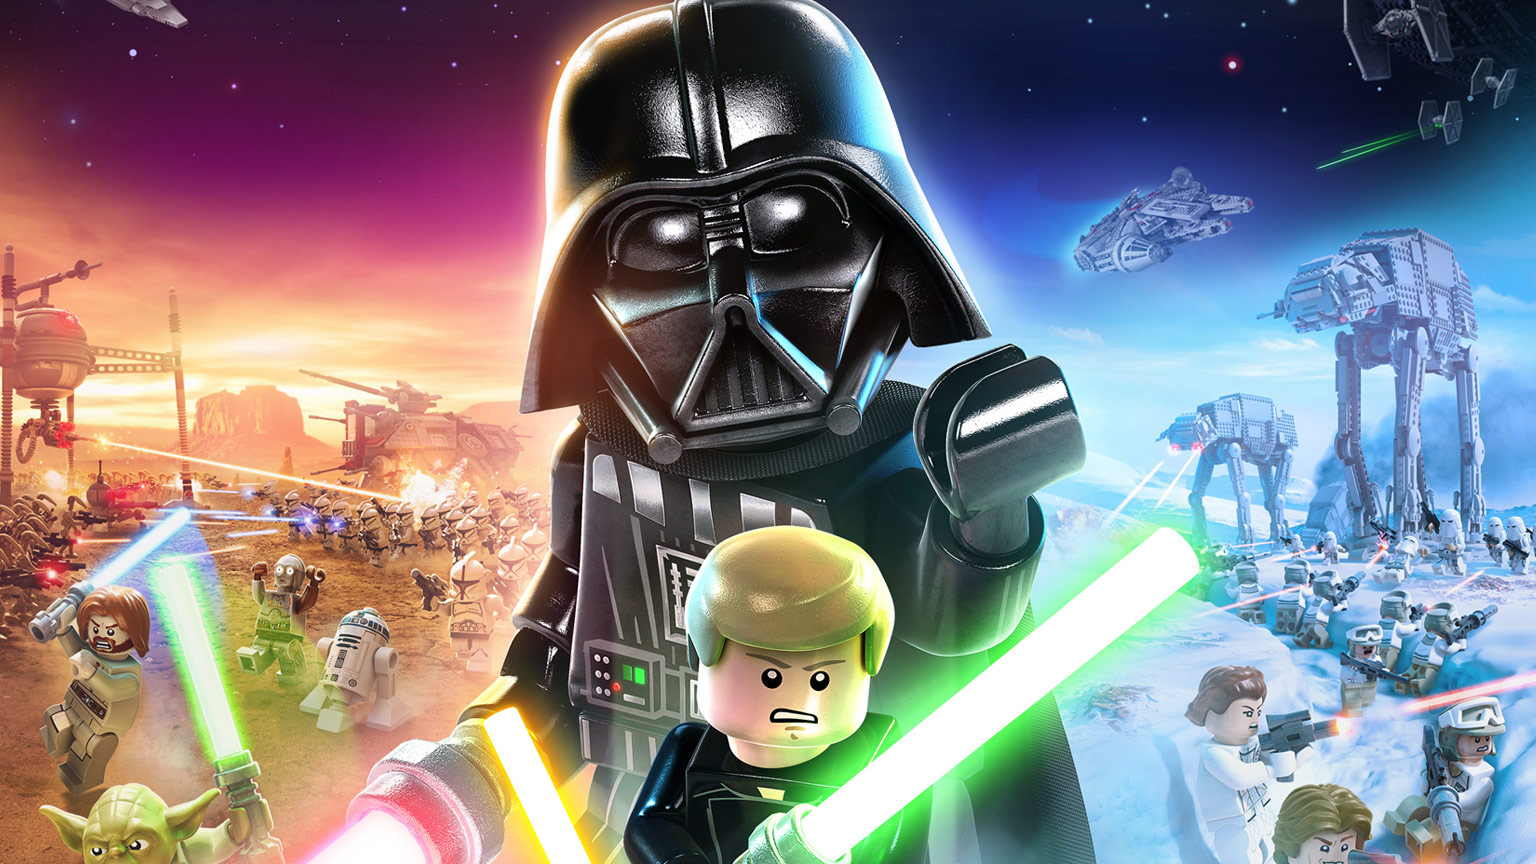 Lego Skywalker Saga New Release Date Revealed in Gamescom Trailer – Gameranx